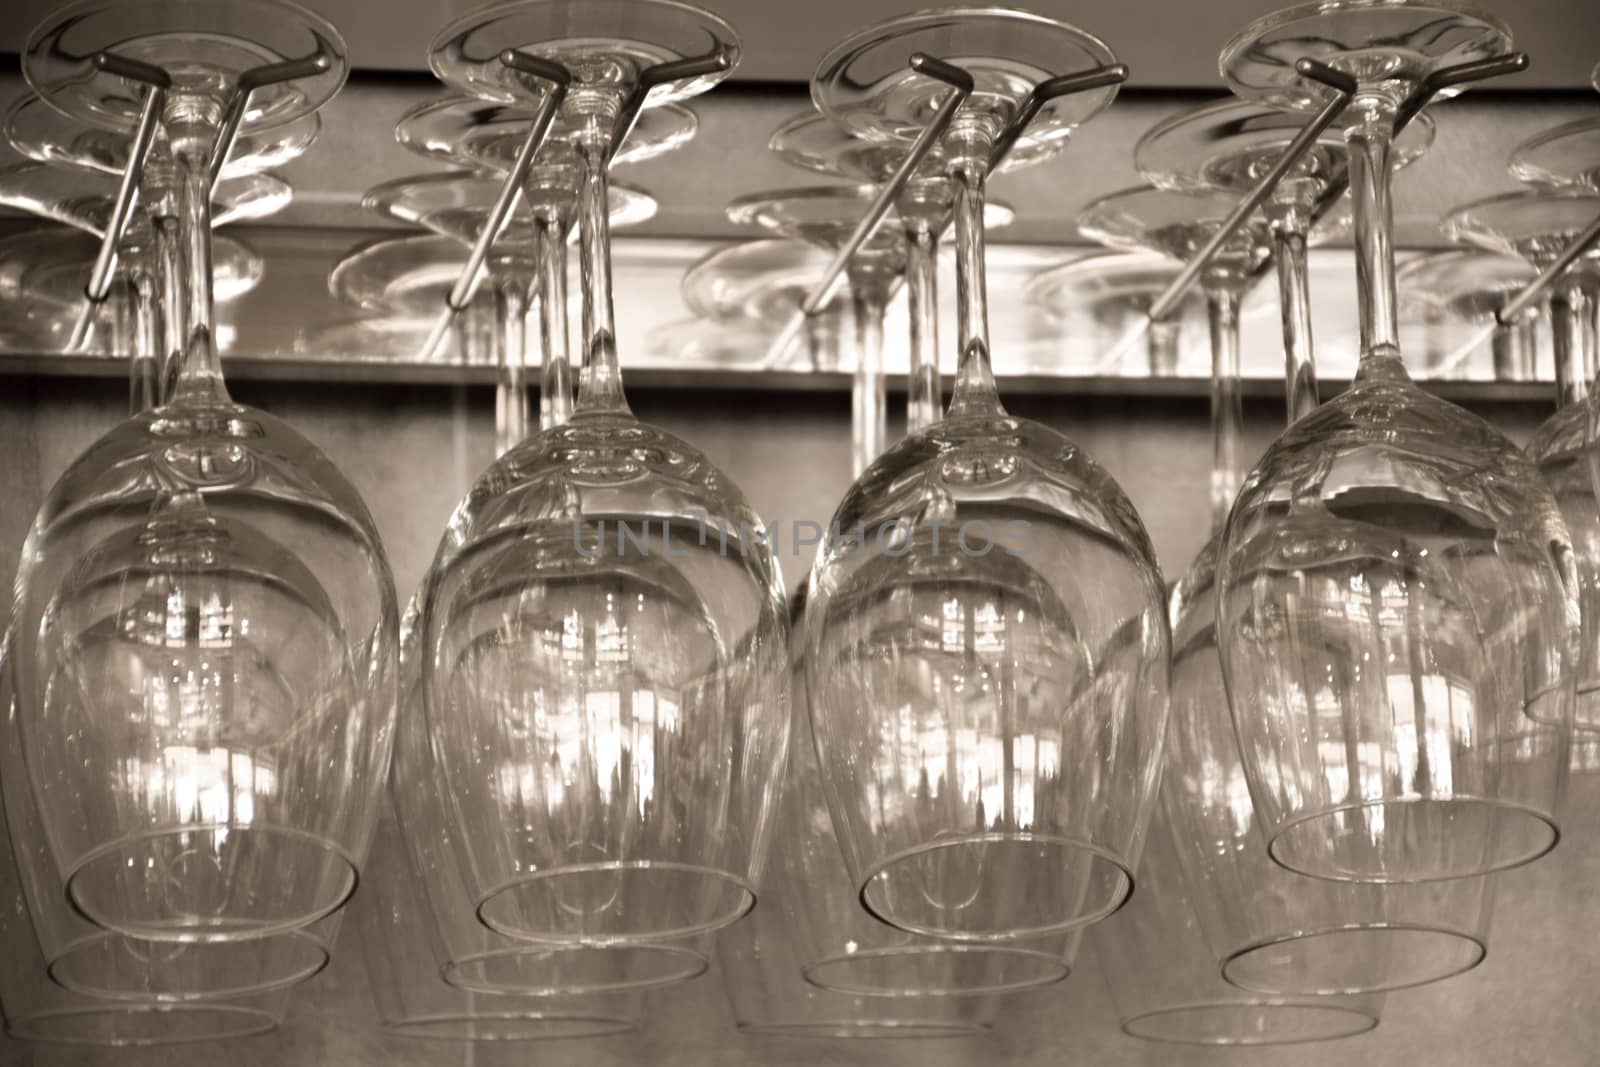 Glass cups hung upside down by Joanastockfoto